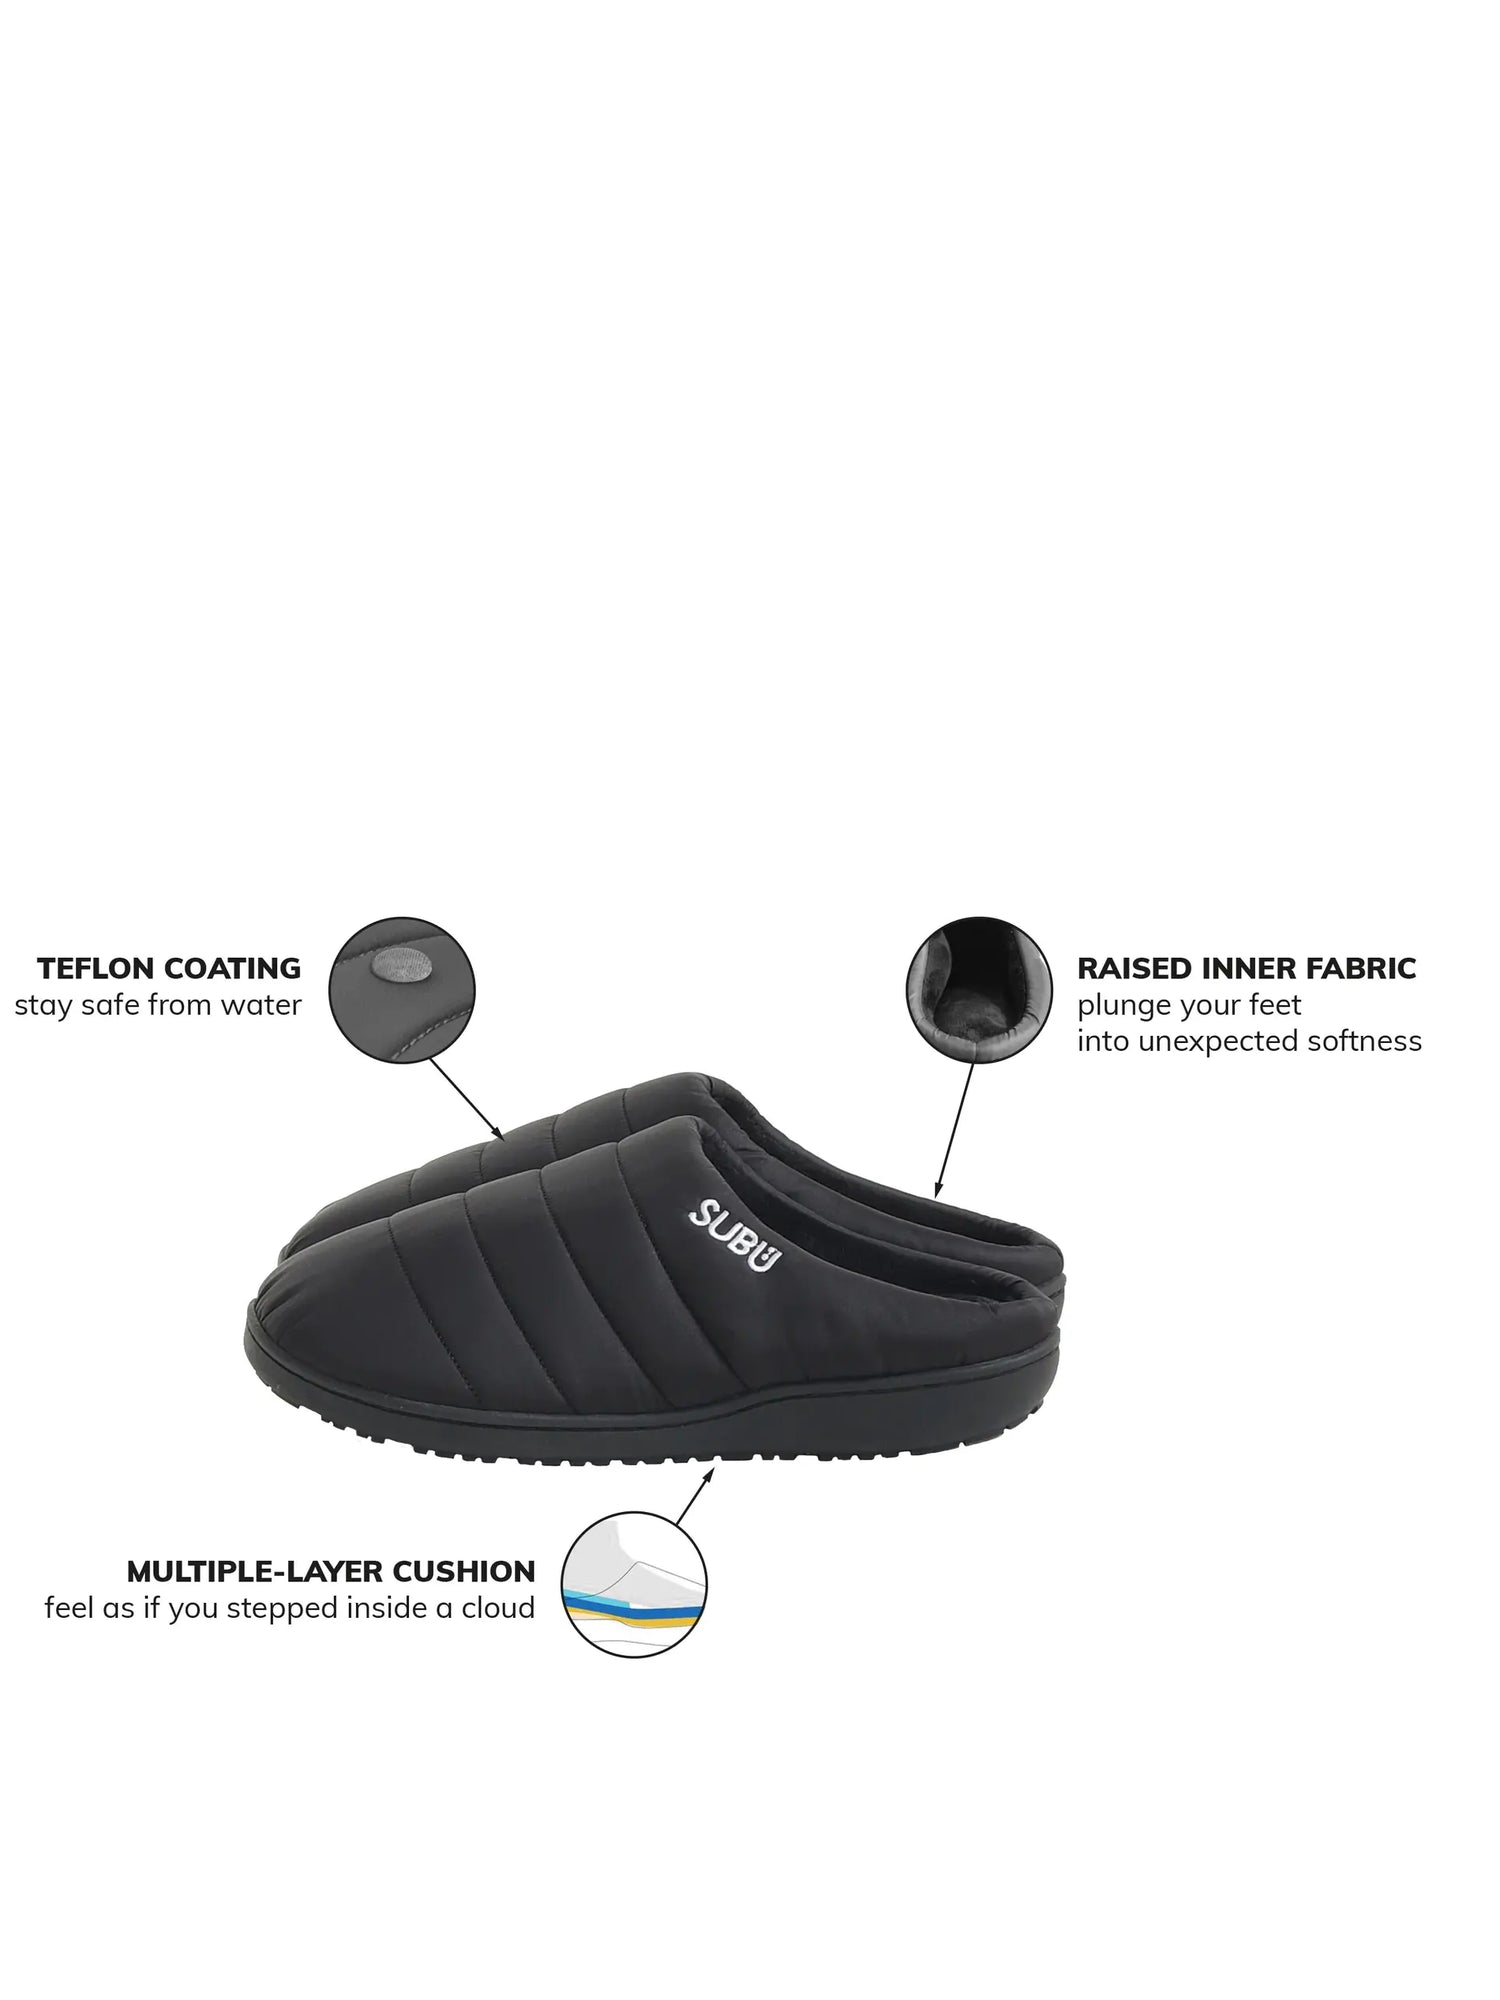 Subu classic puffer slippers, black